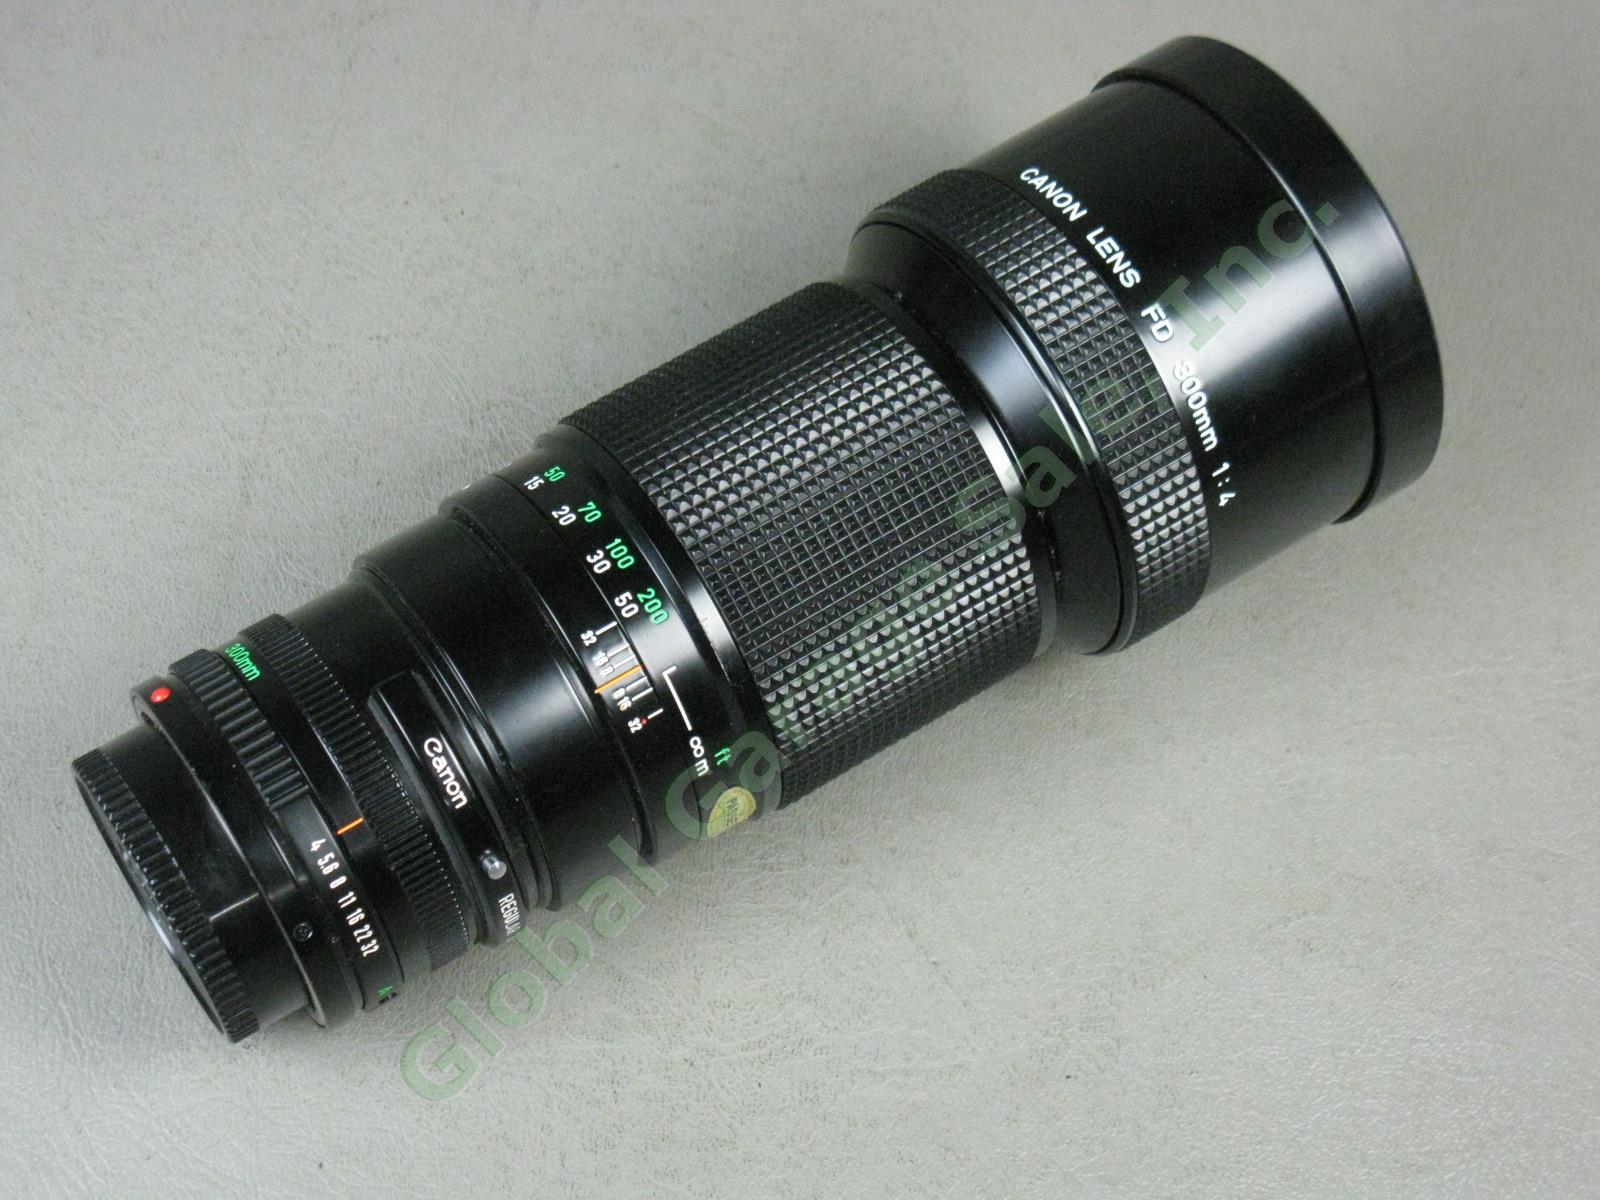 Canon FD 300mm 1:4 f/4 Telephoto Camera Lens 21907 Exc Condition No Reserve!